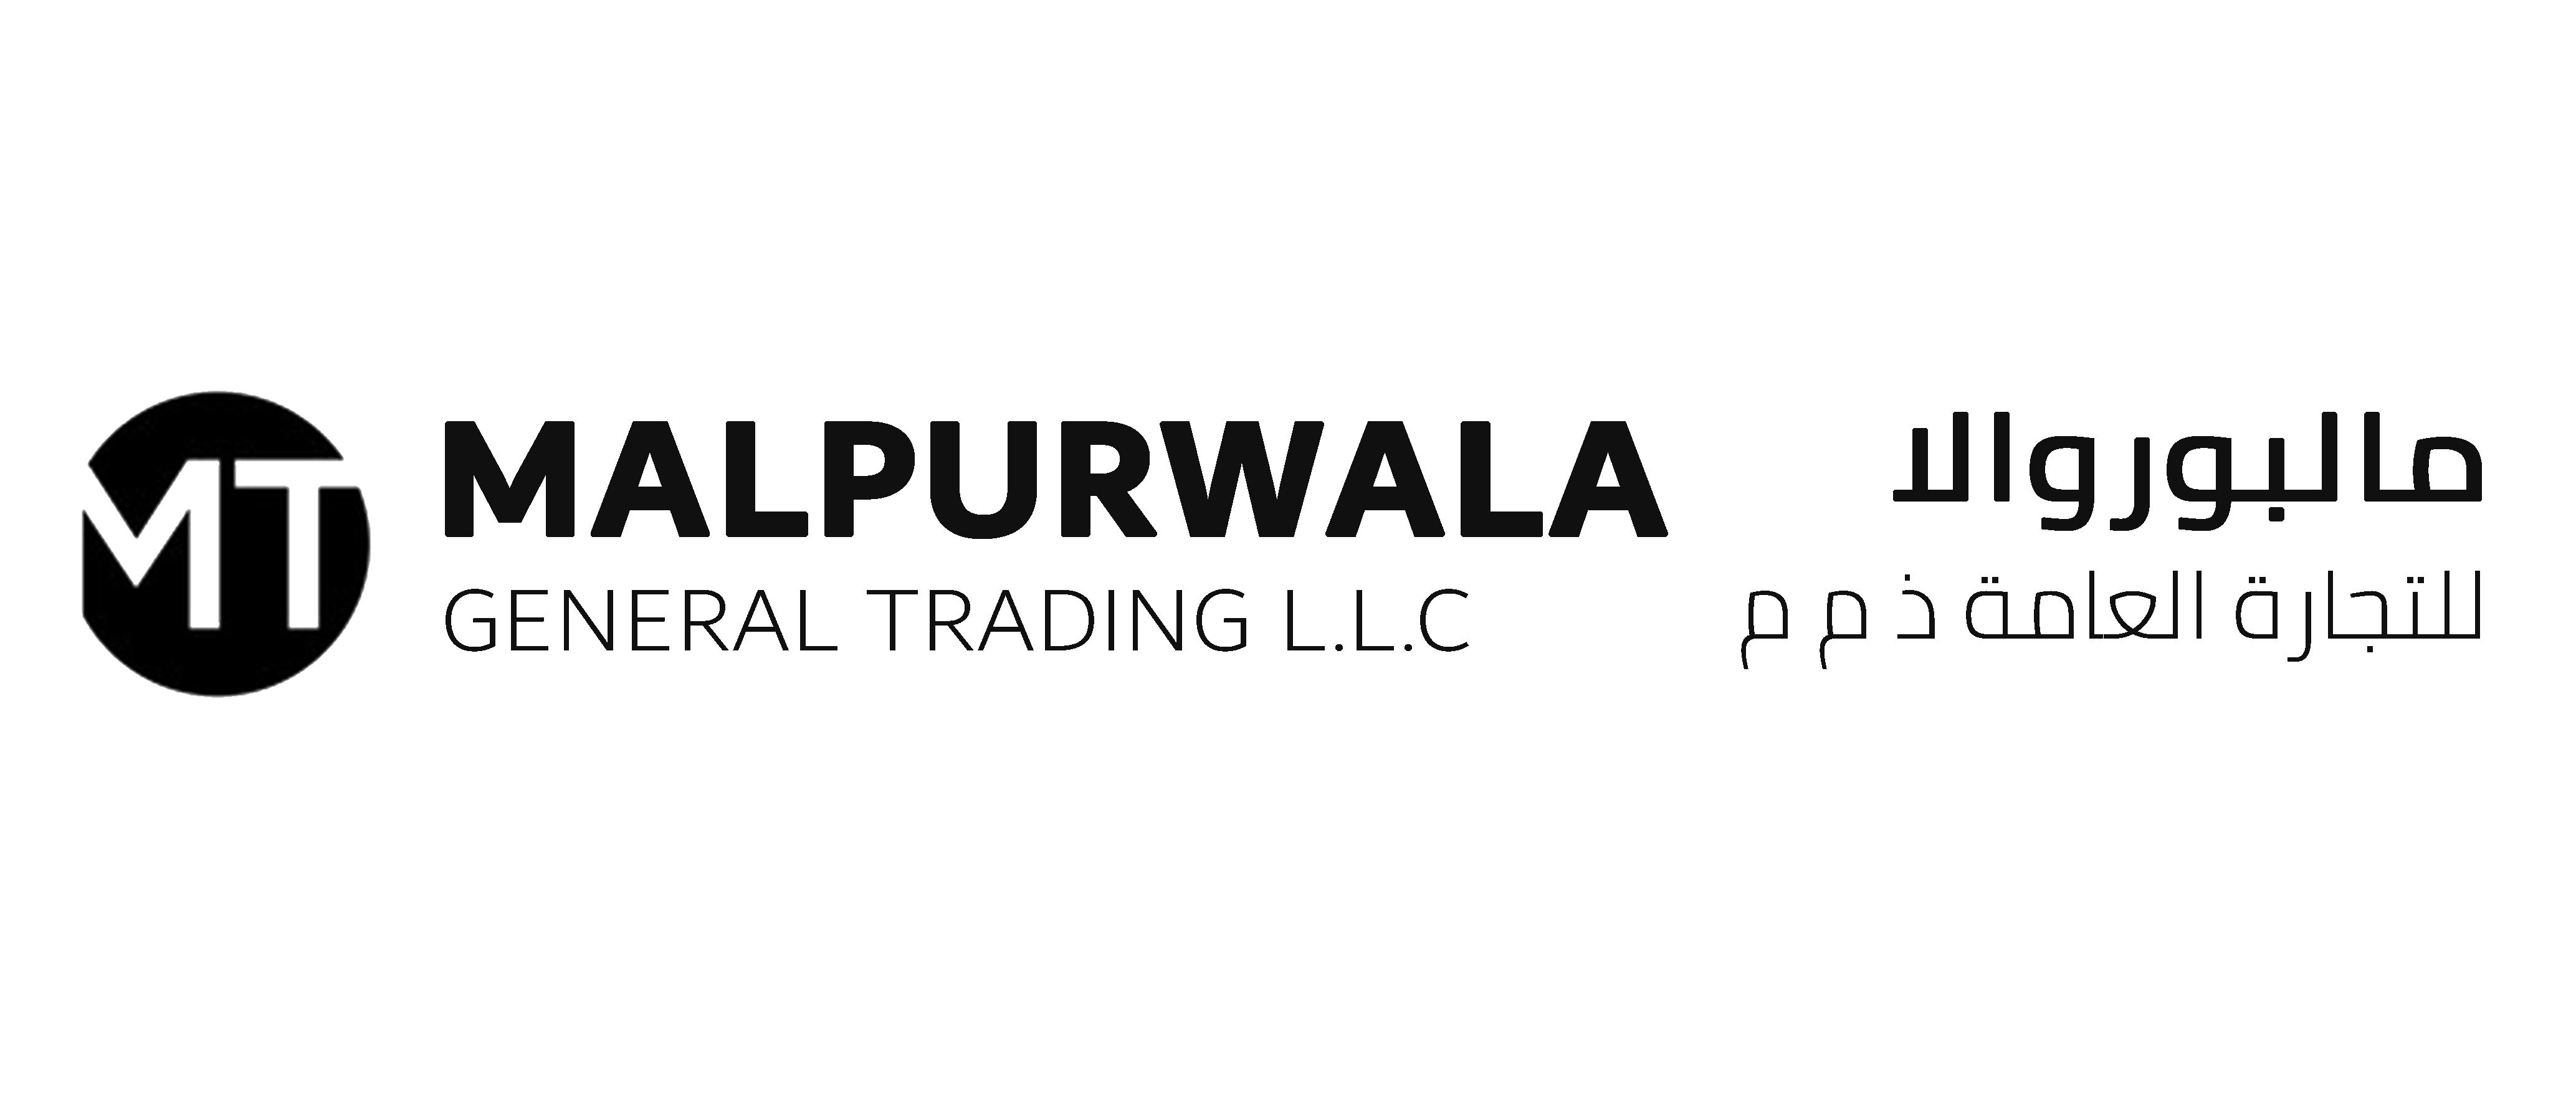 Malpurwala General Trading